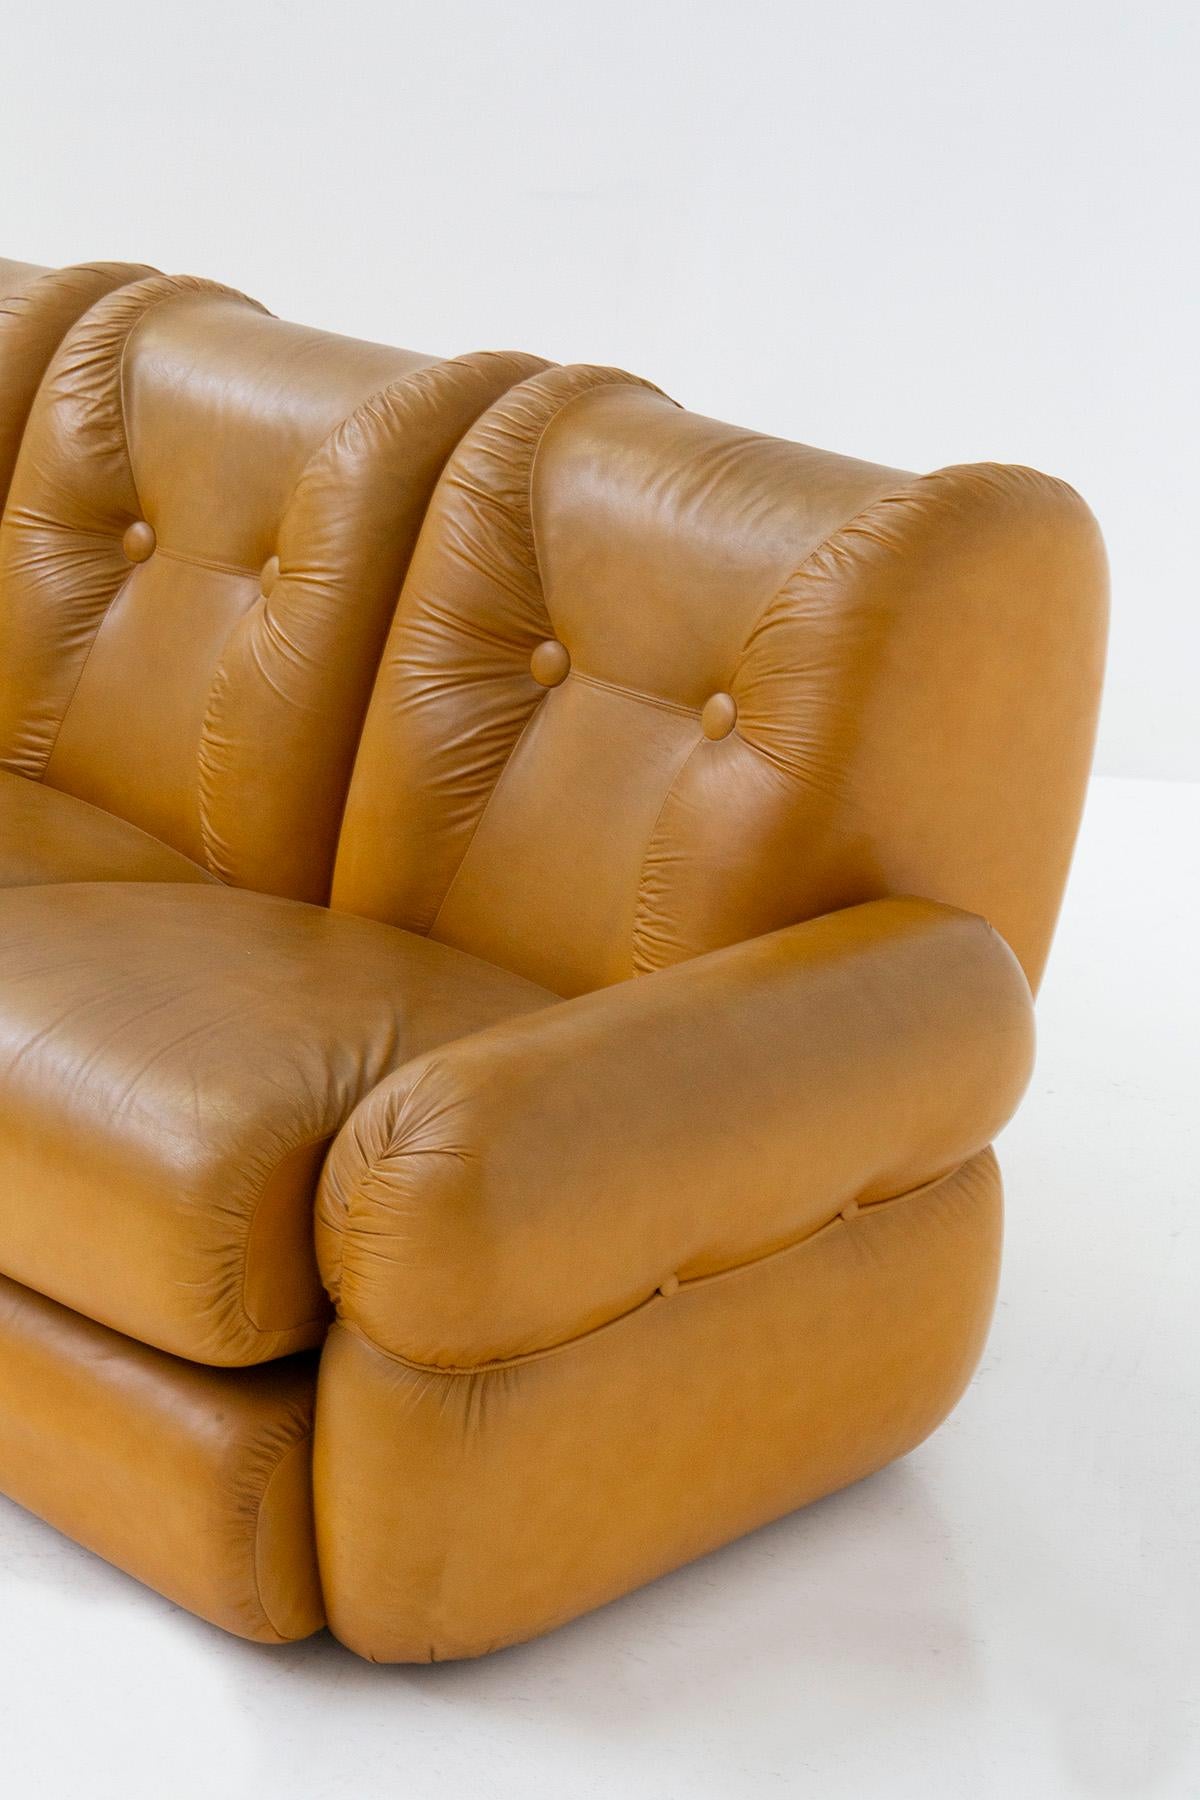 old school leather sofa